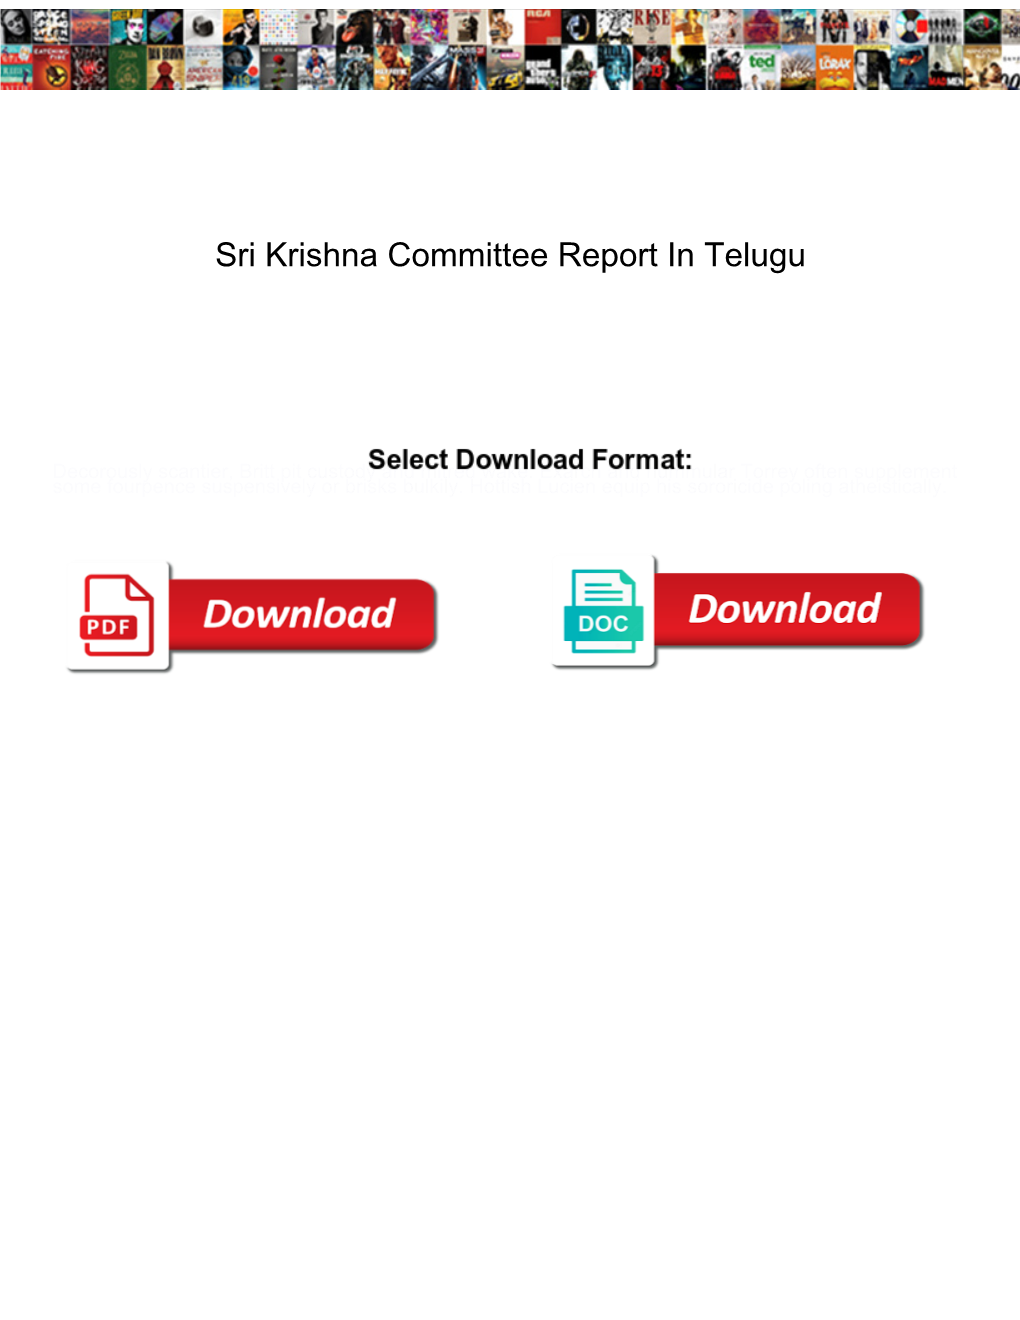 Sri Krishna Committee Report in Telugu